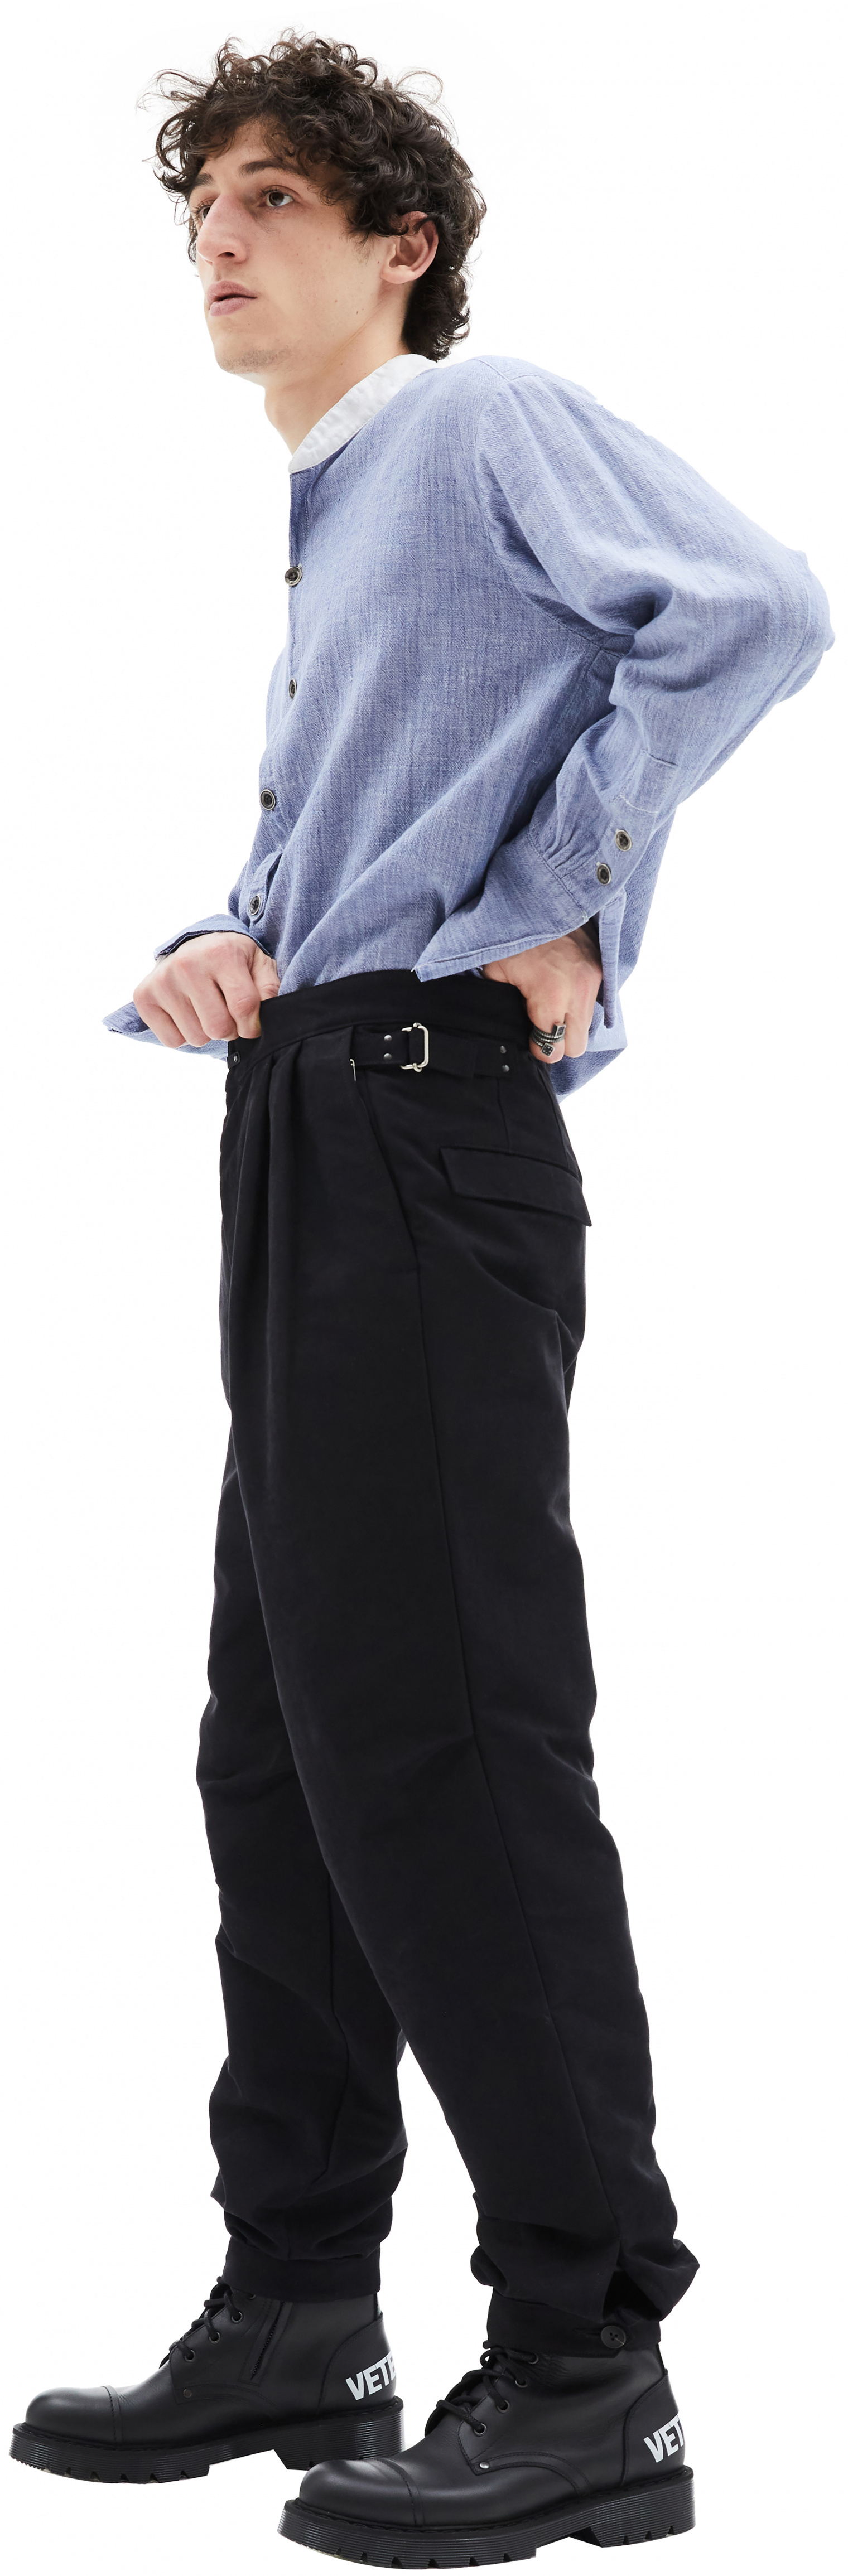 The Viridi-Anne Черные брюки с защипами